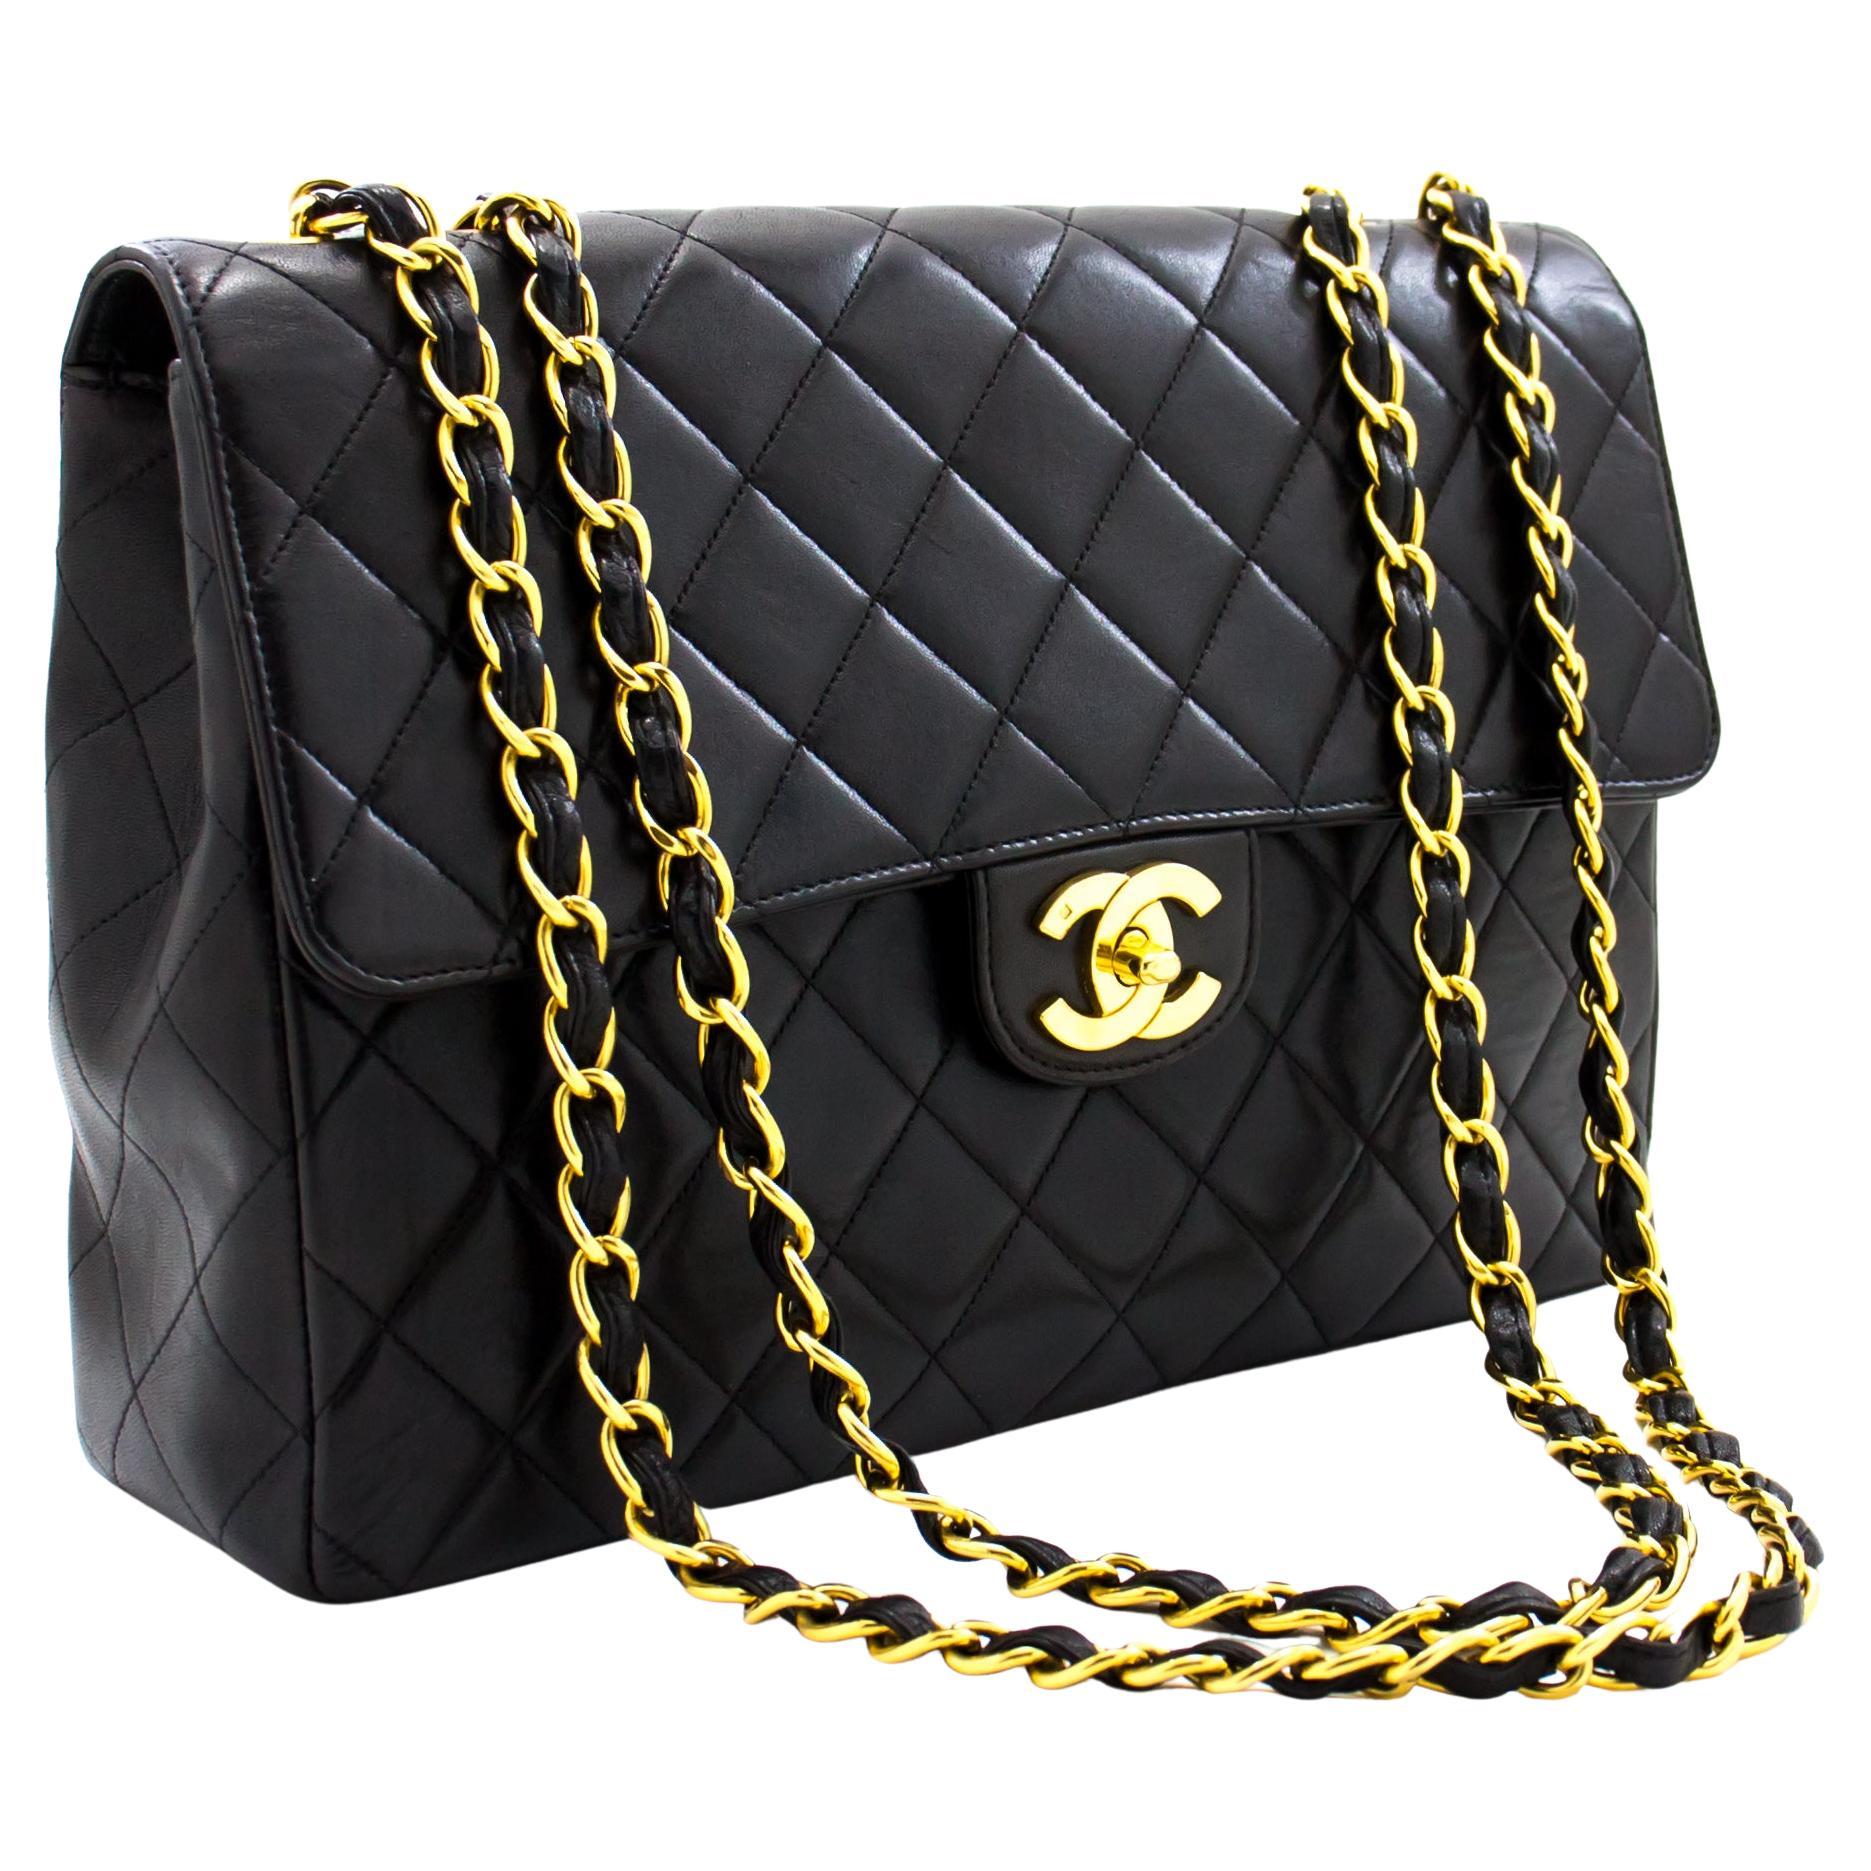 Chanel Jumbo 11 Large Chain Shoulder Bag Flap Lambskin Black Gold